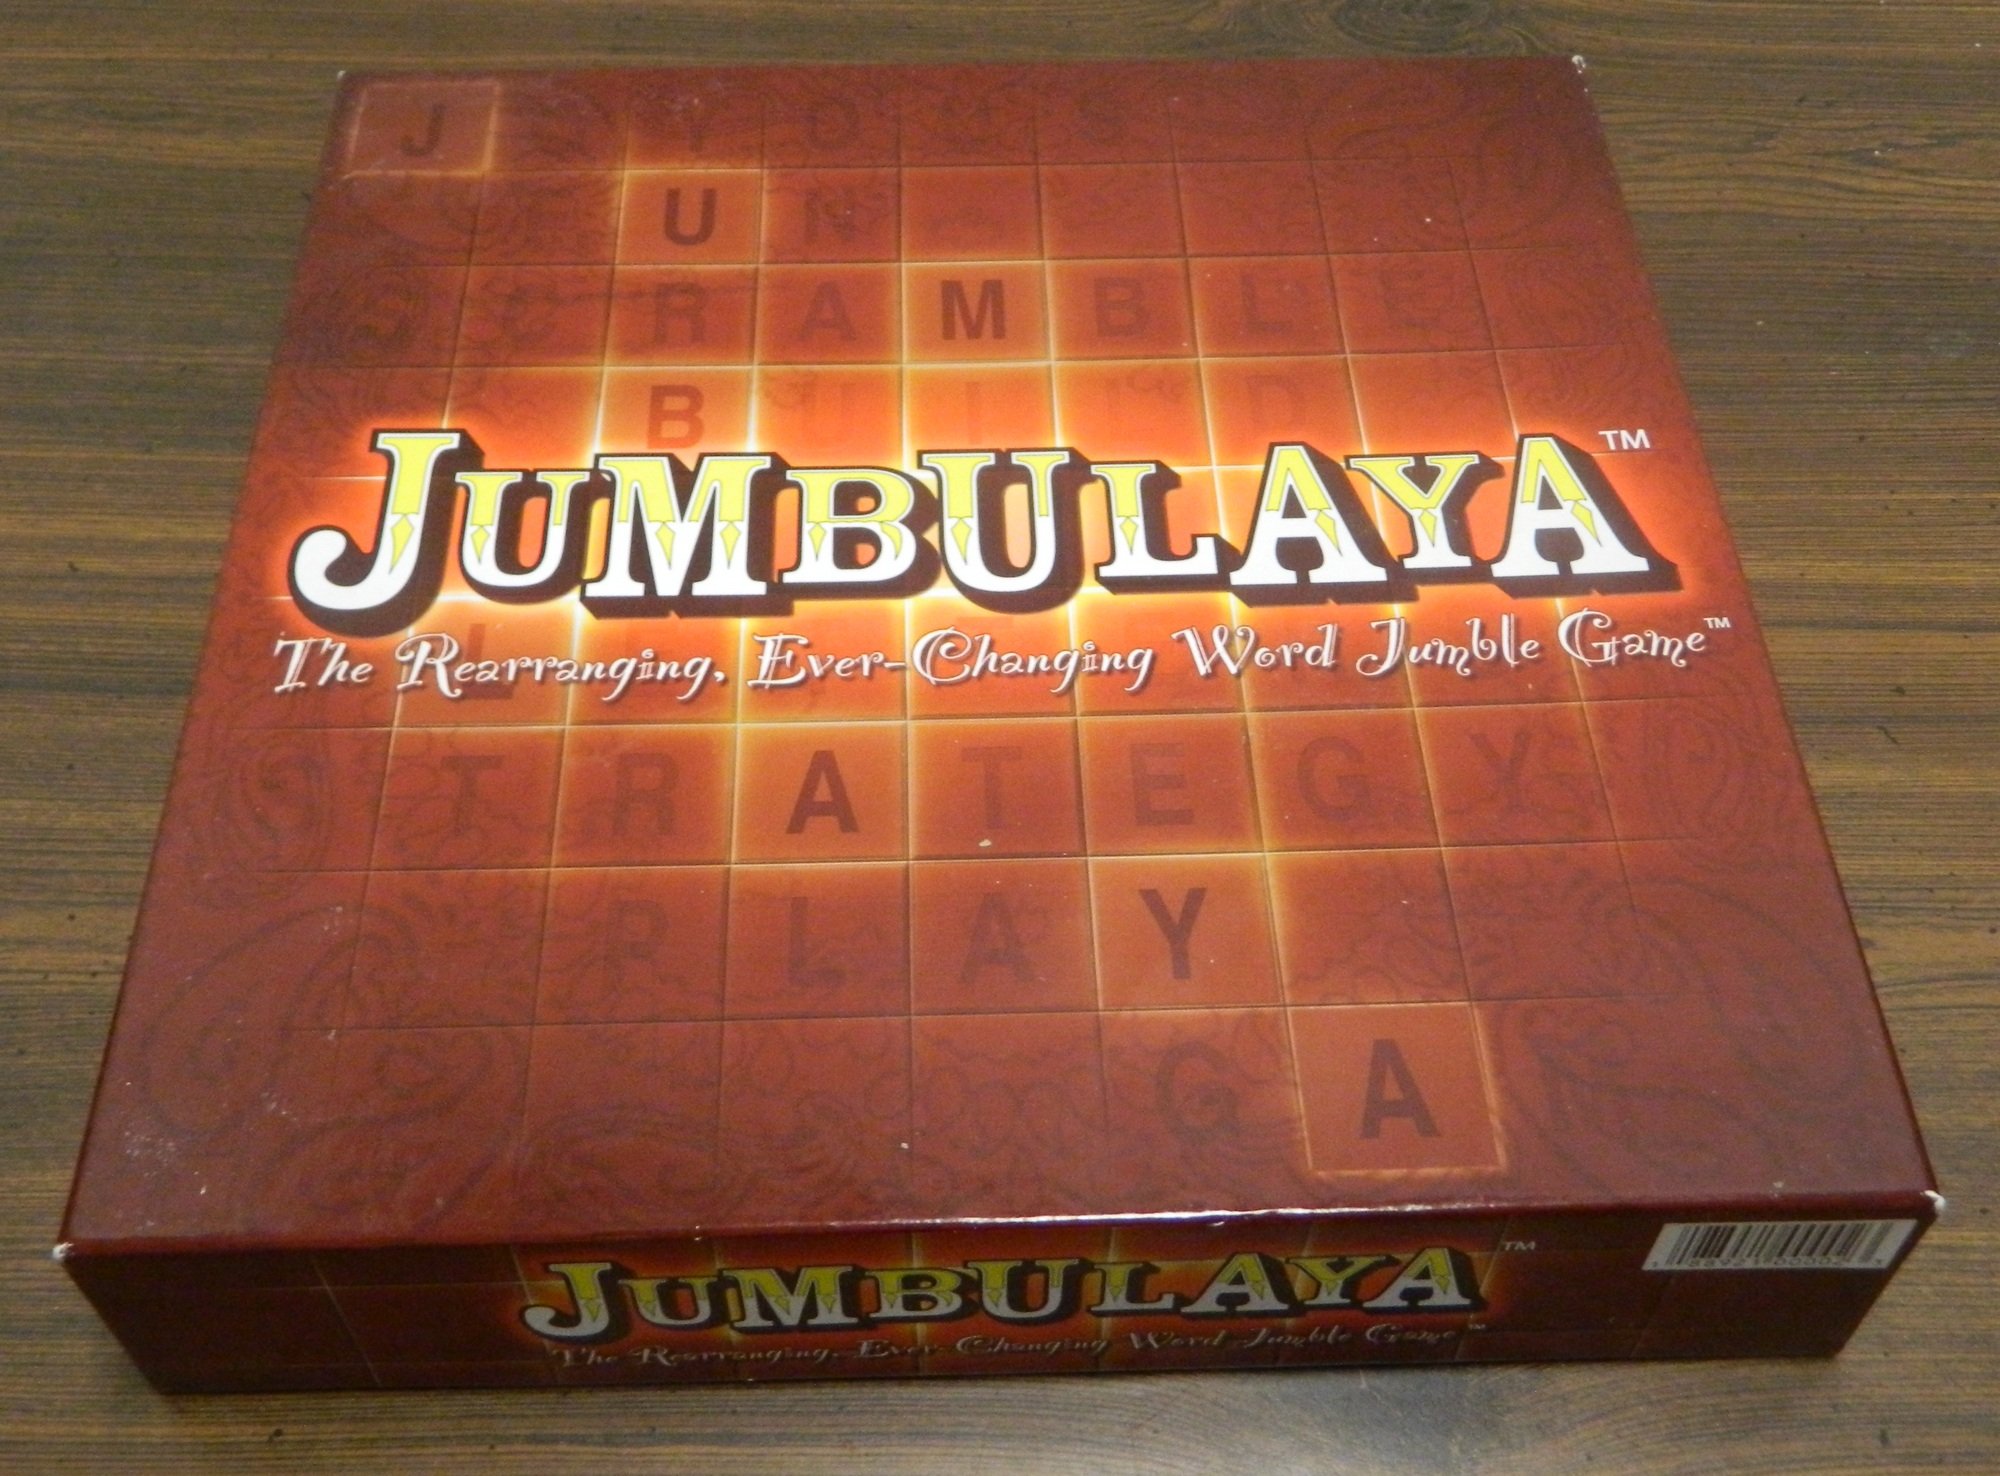 Box for Jumbulaya